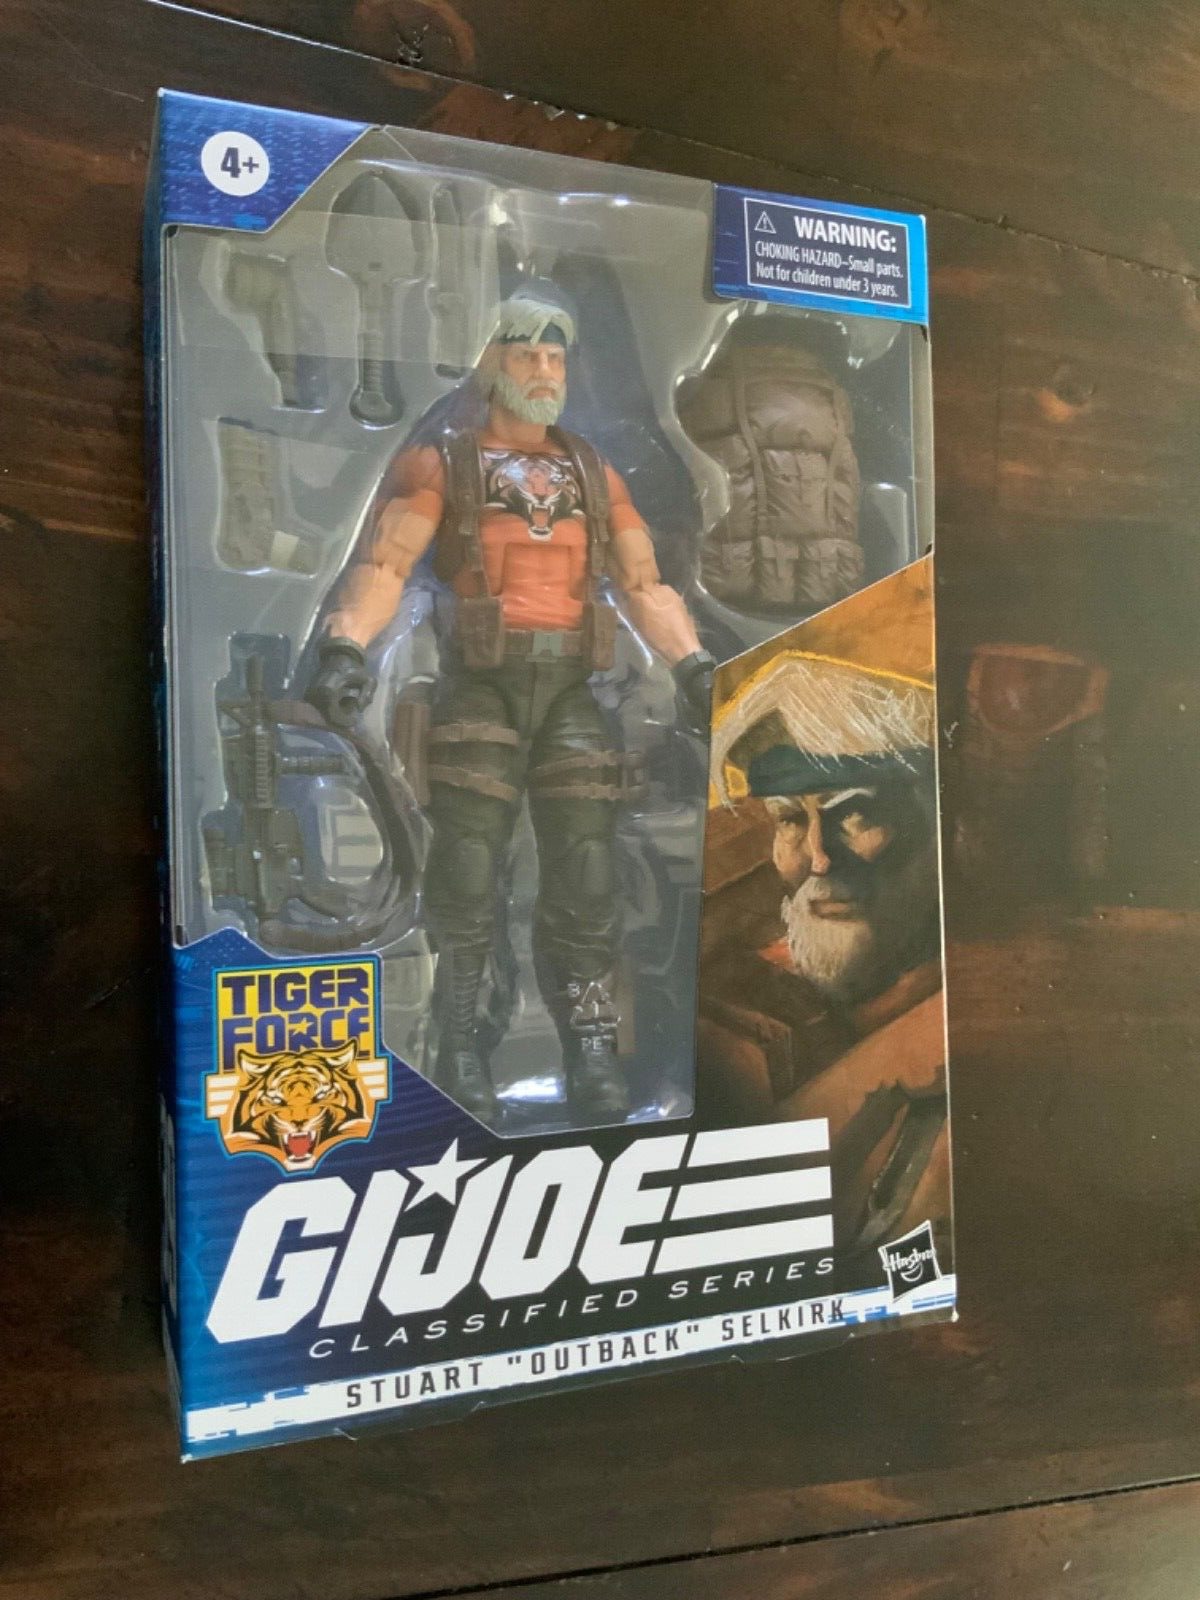 Hasbro G.I. Joe Classified Series Stuart "Outback" Selkirk (Tiger Force) (NISB)